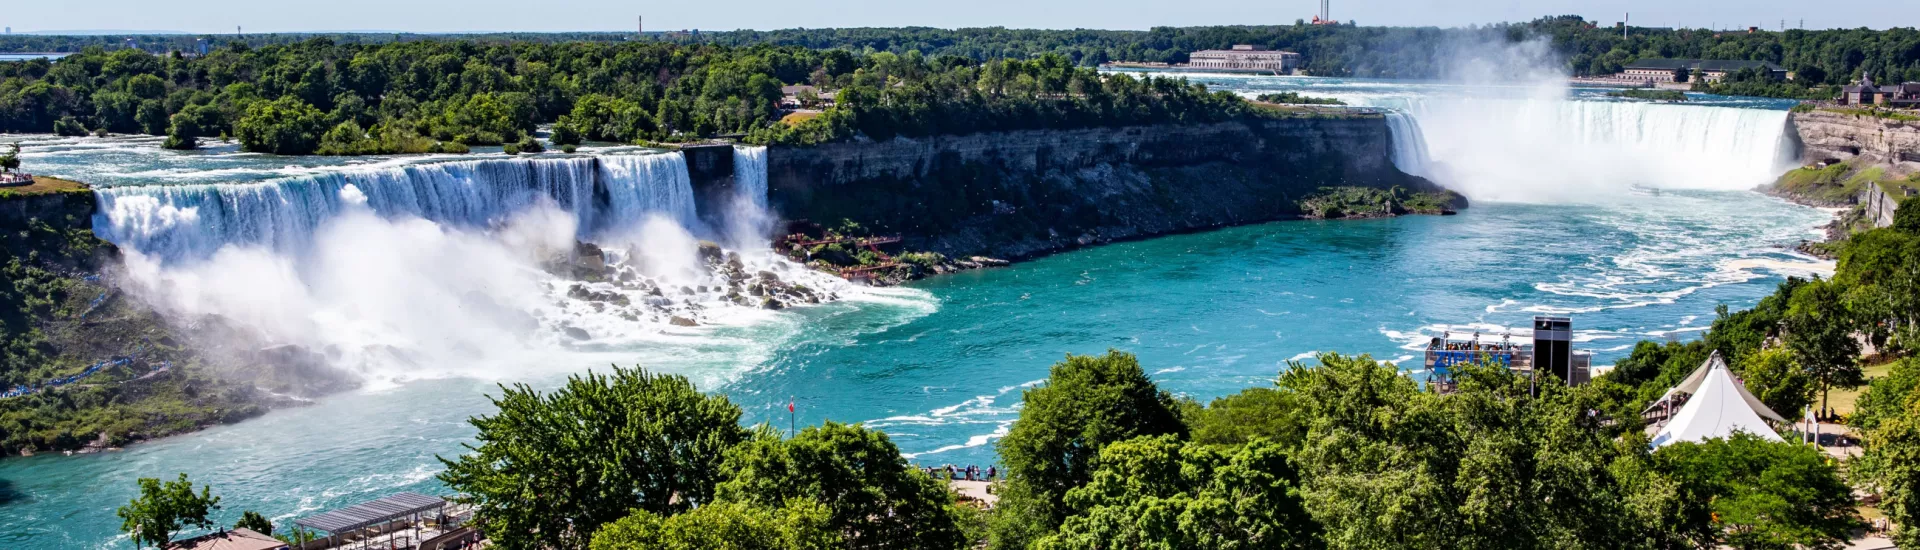 Niagara falls from Fallsview restaurant